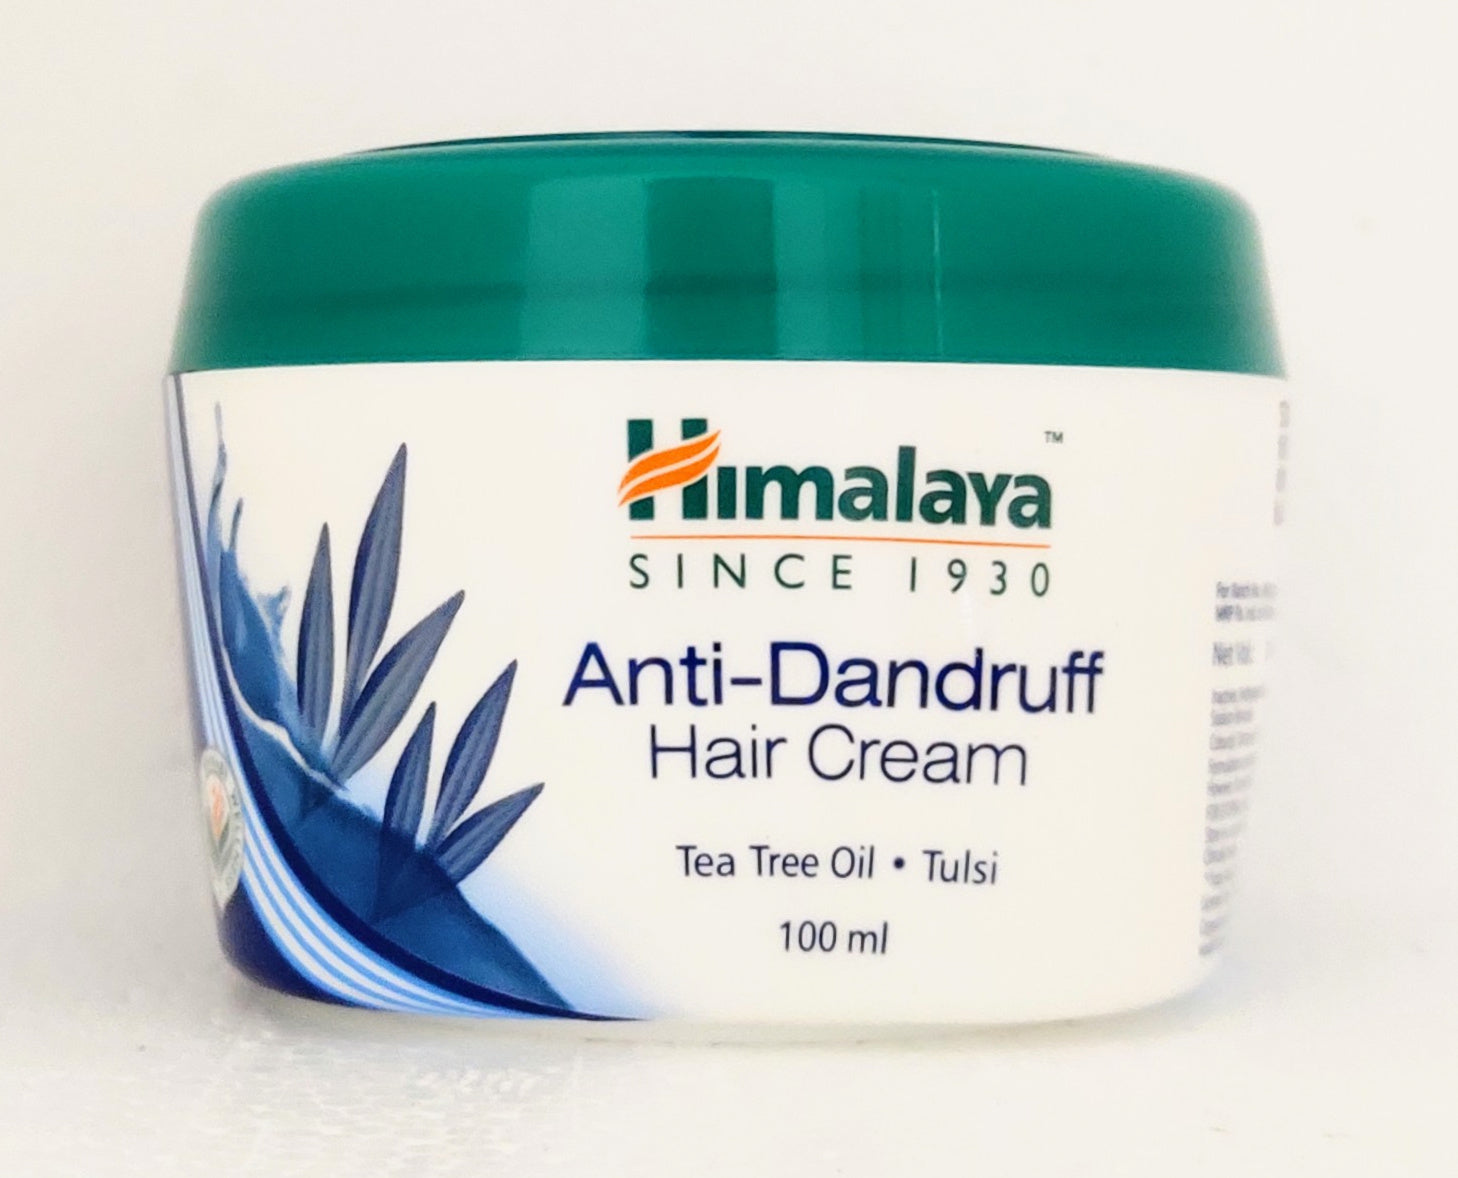 Himalaya anti dandruff hair cream 100ml -  Himalaya - Medizzo.com